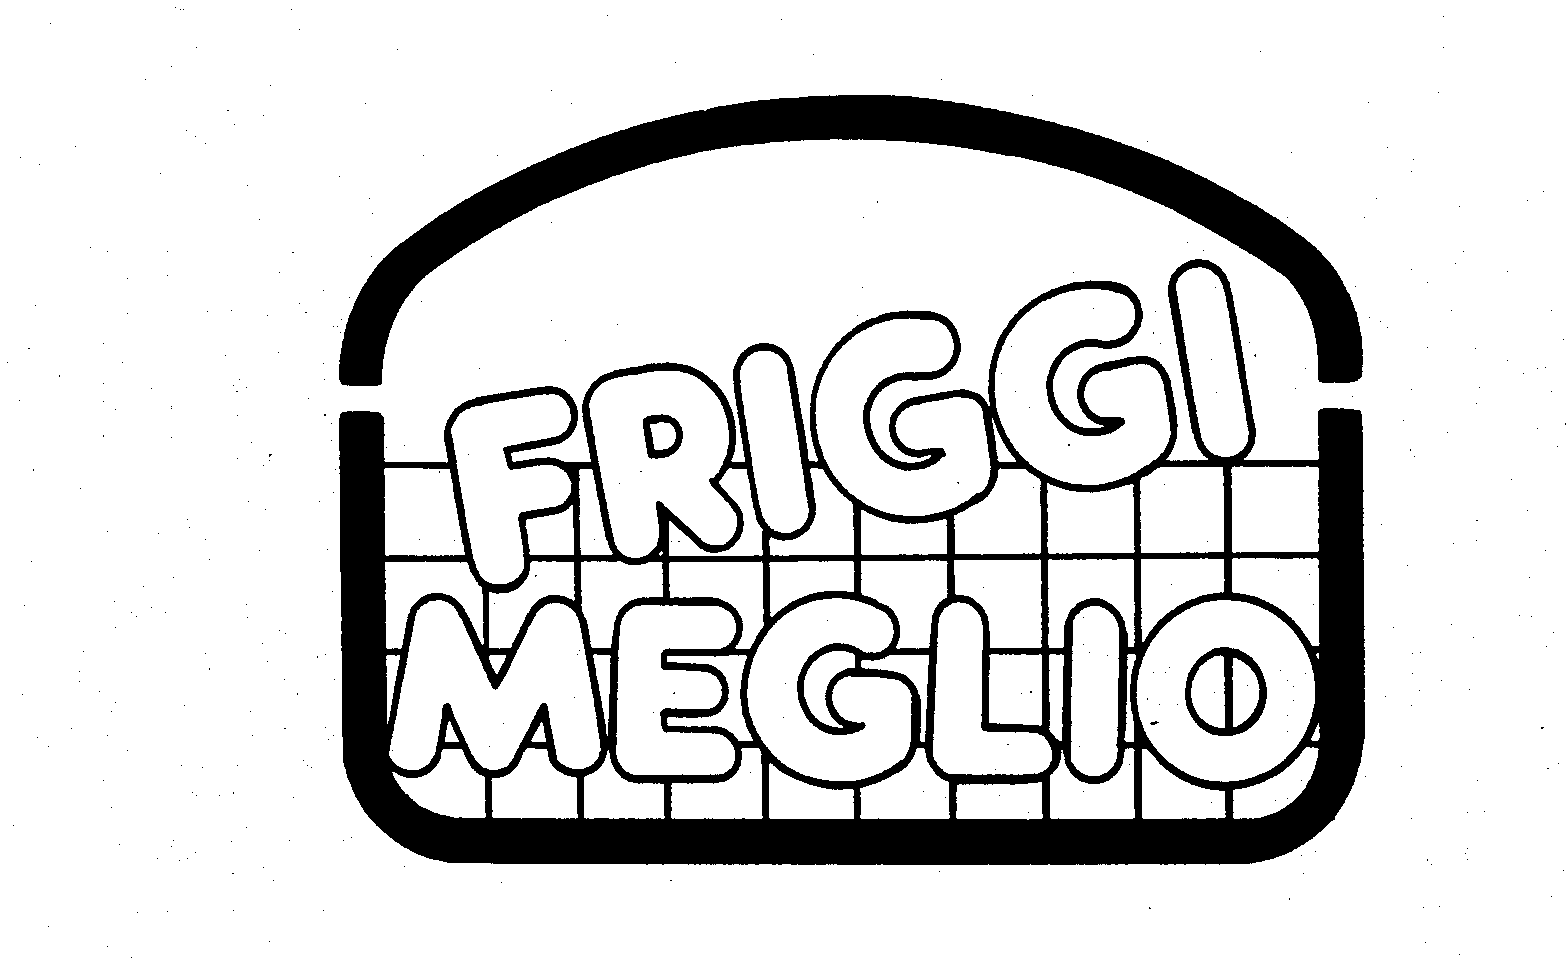  FRIGGI MEGLIO